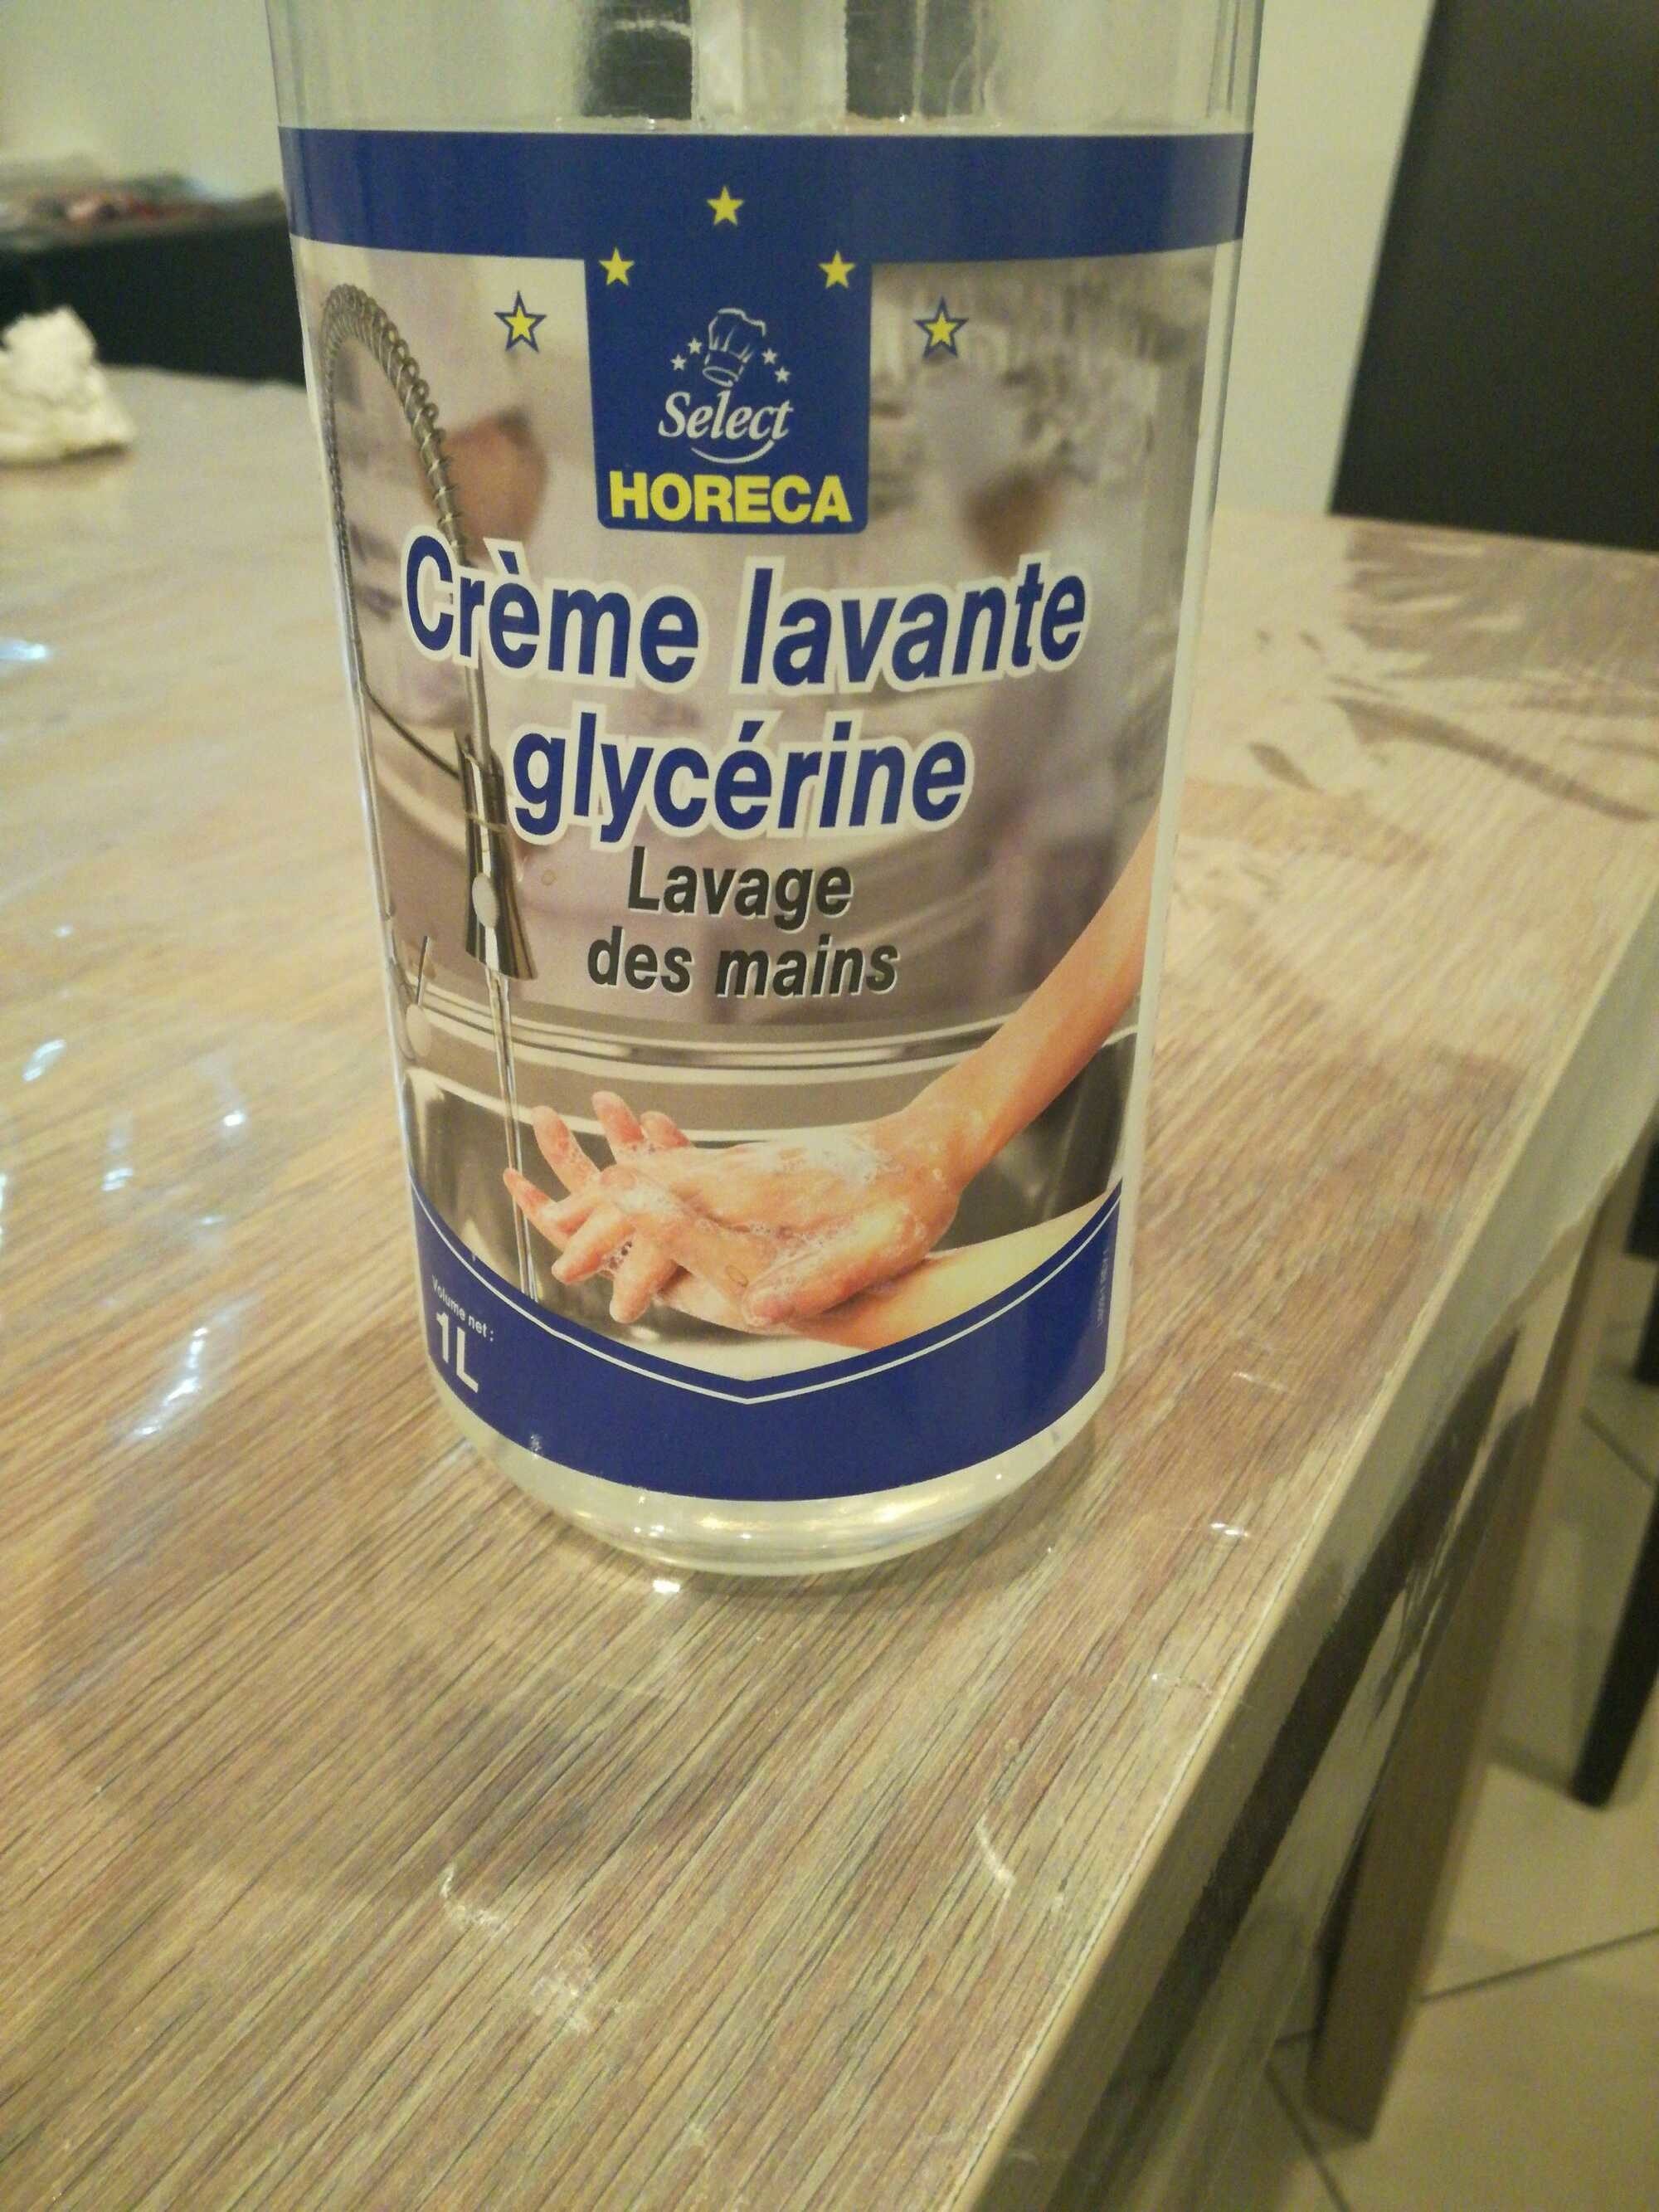 Creme lavante main glycerine - Product - fr